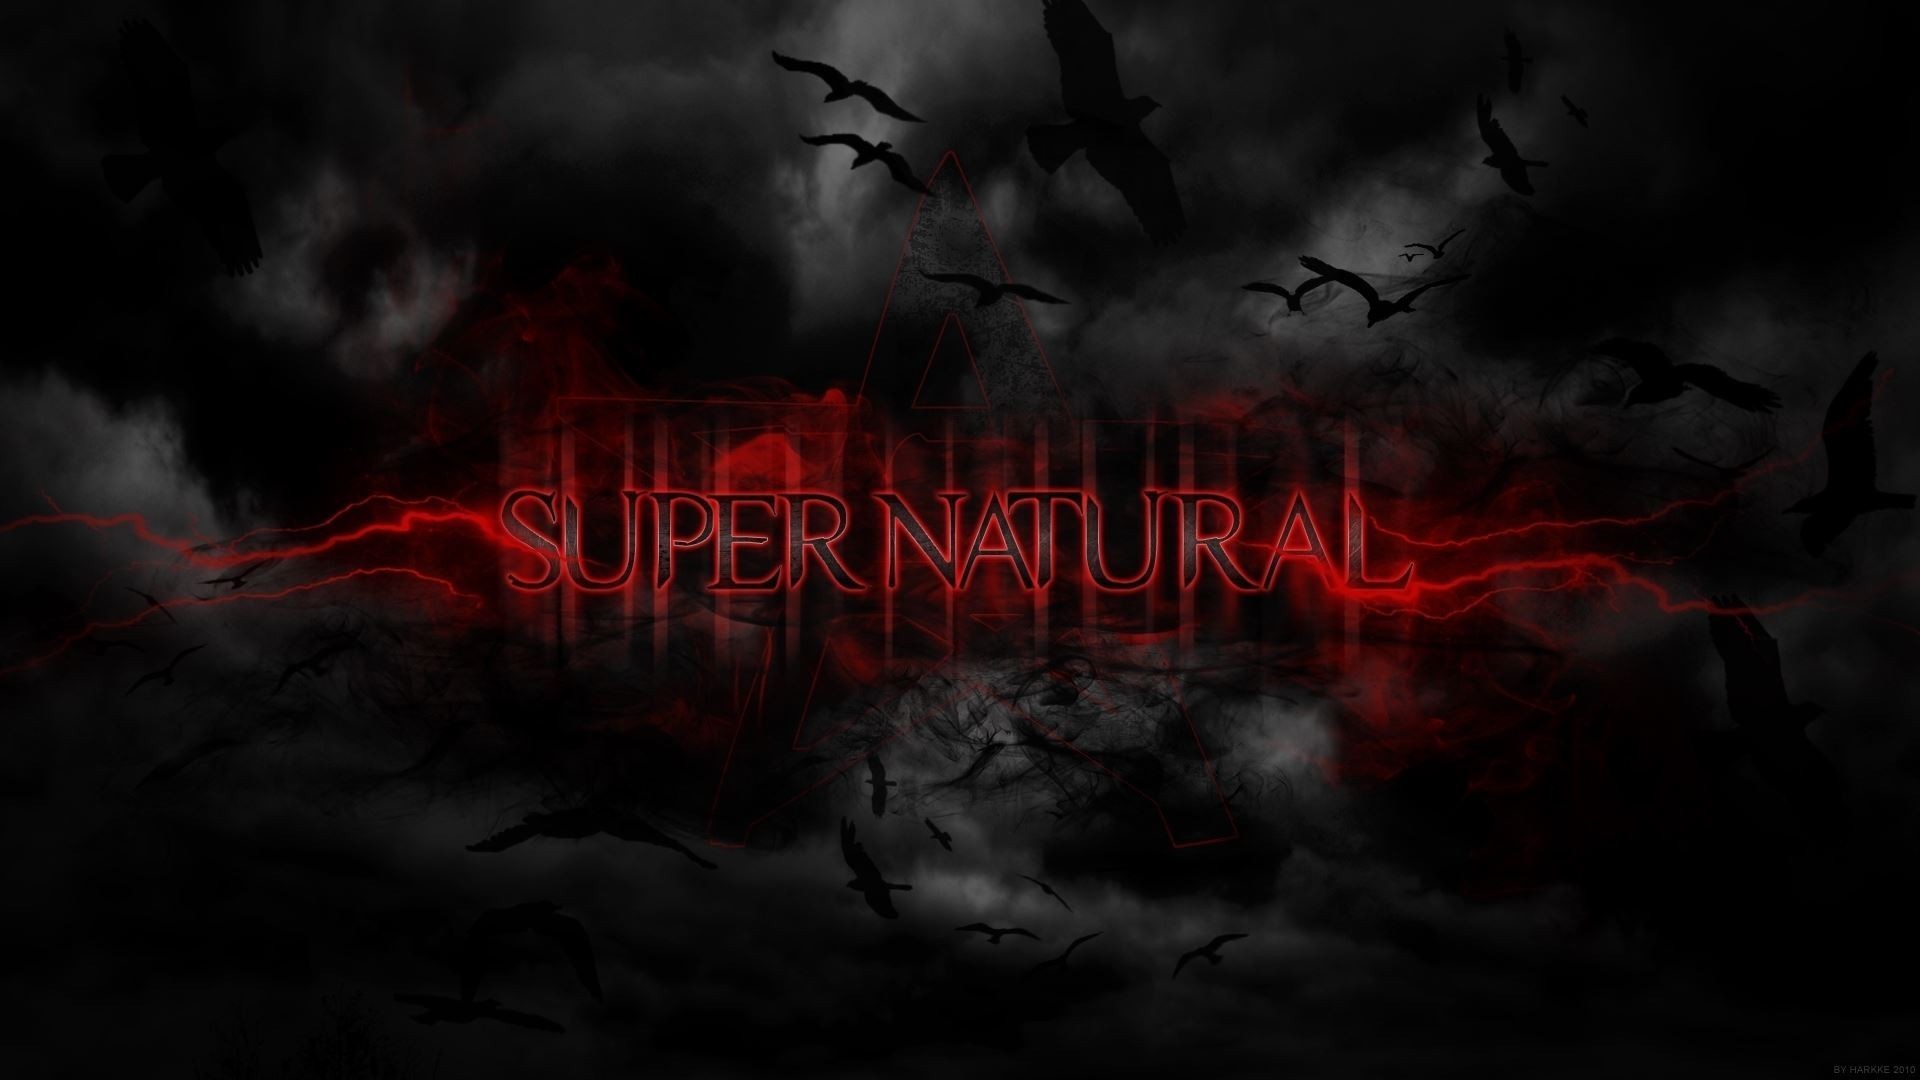 supernatural wallpaper